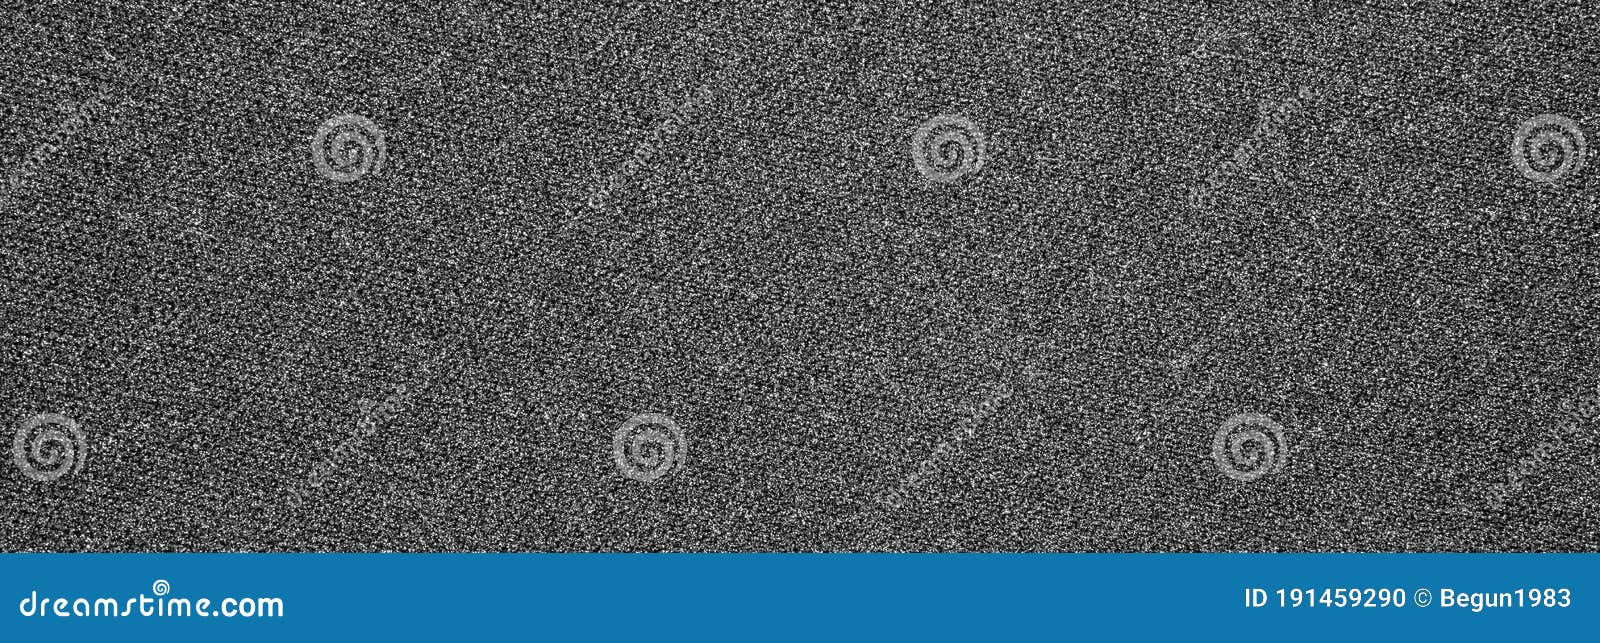 The Texture of a Dense Gray Carpet.Grey Carpet Background. Stock Photo ...